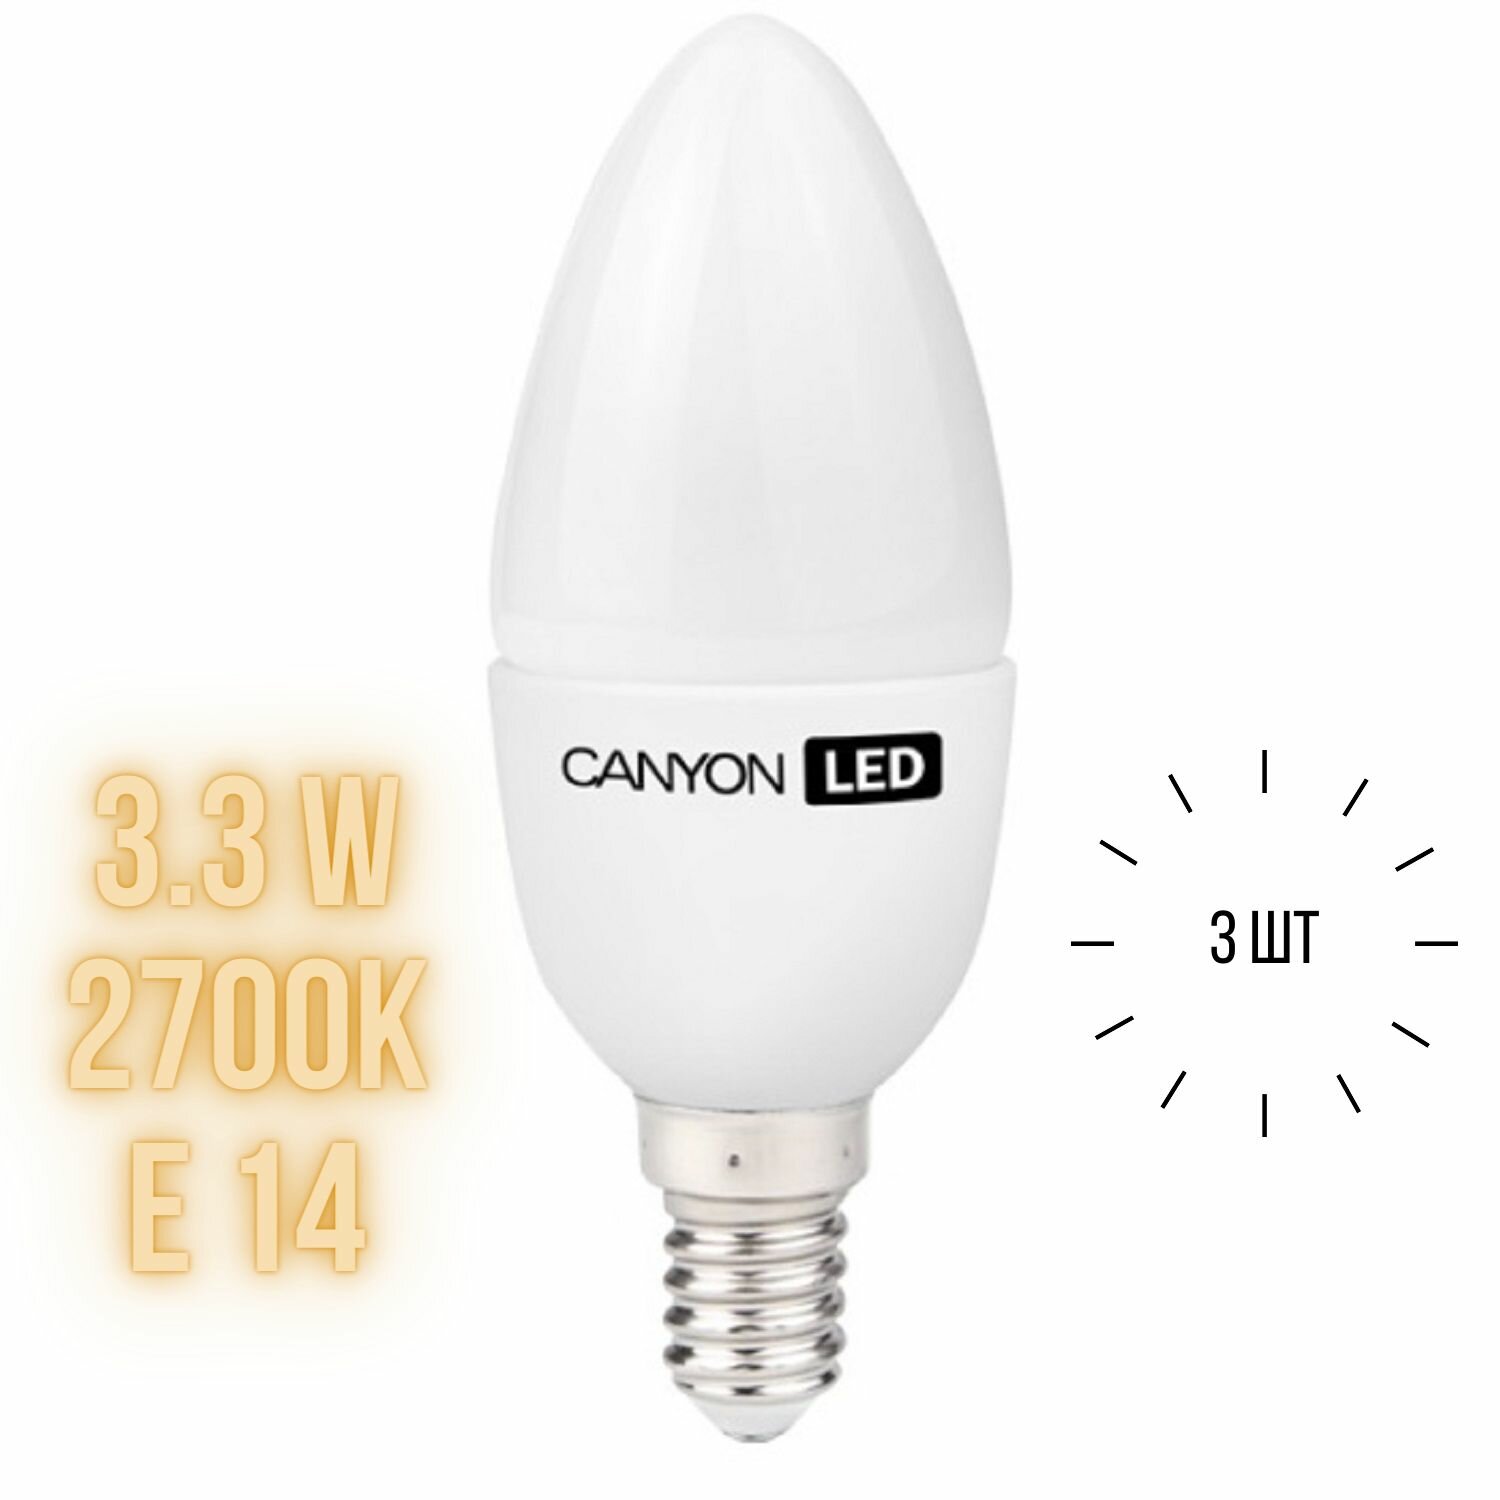 Лампа Canyon светодиодная B38-3.3W/2700/E14 BE14FR33W230VW набор 3 шт.